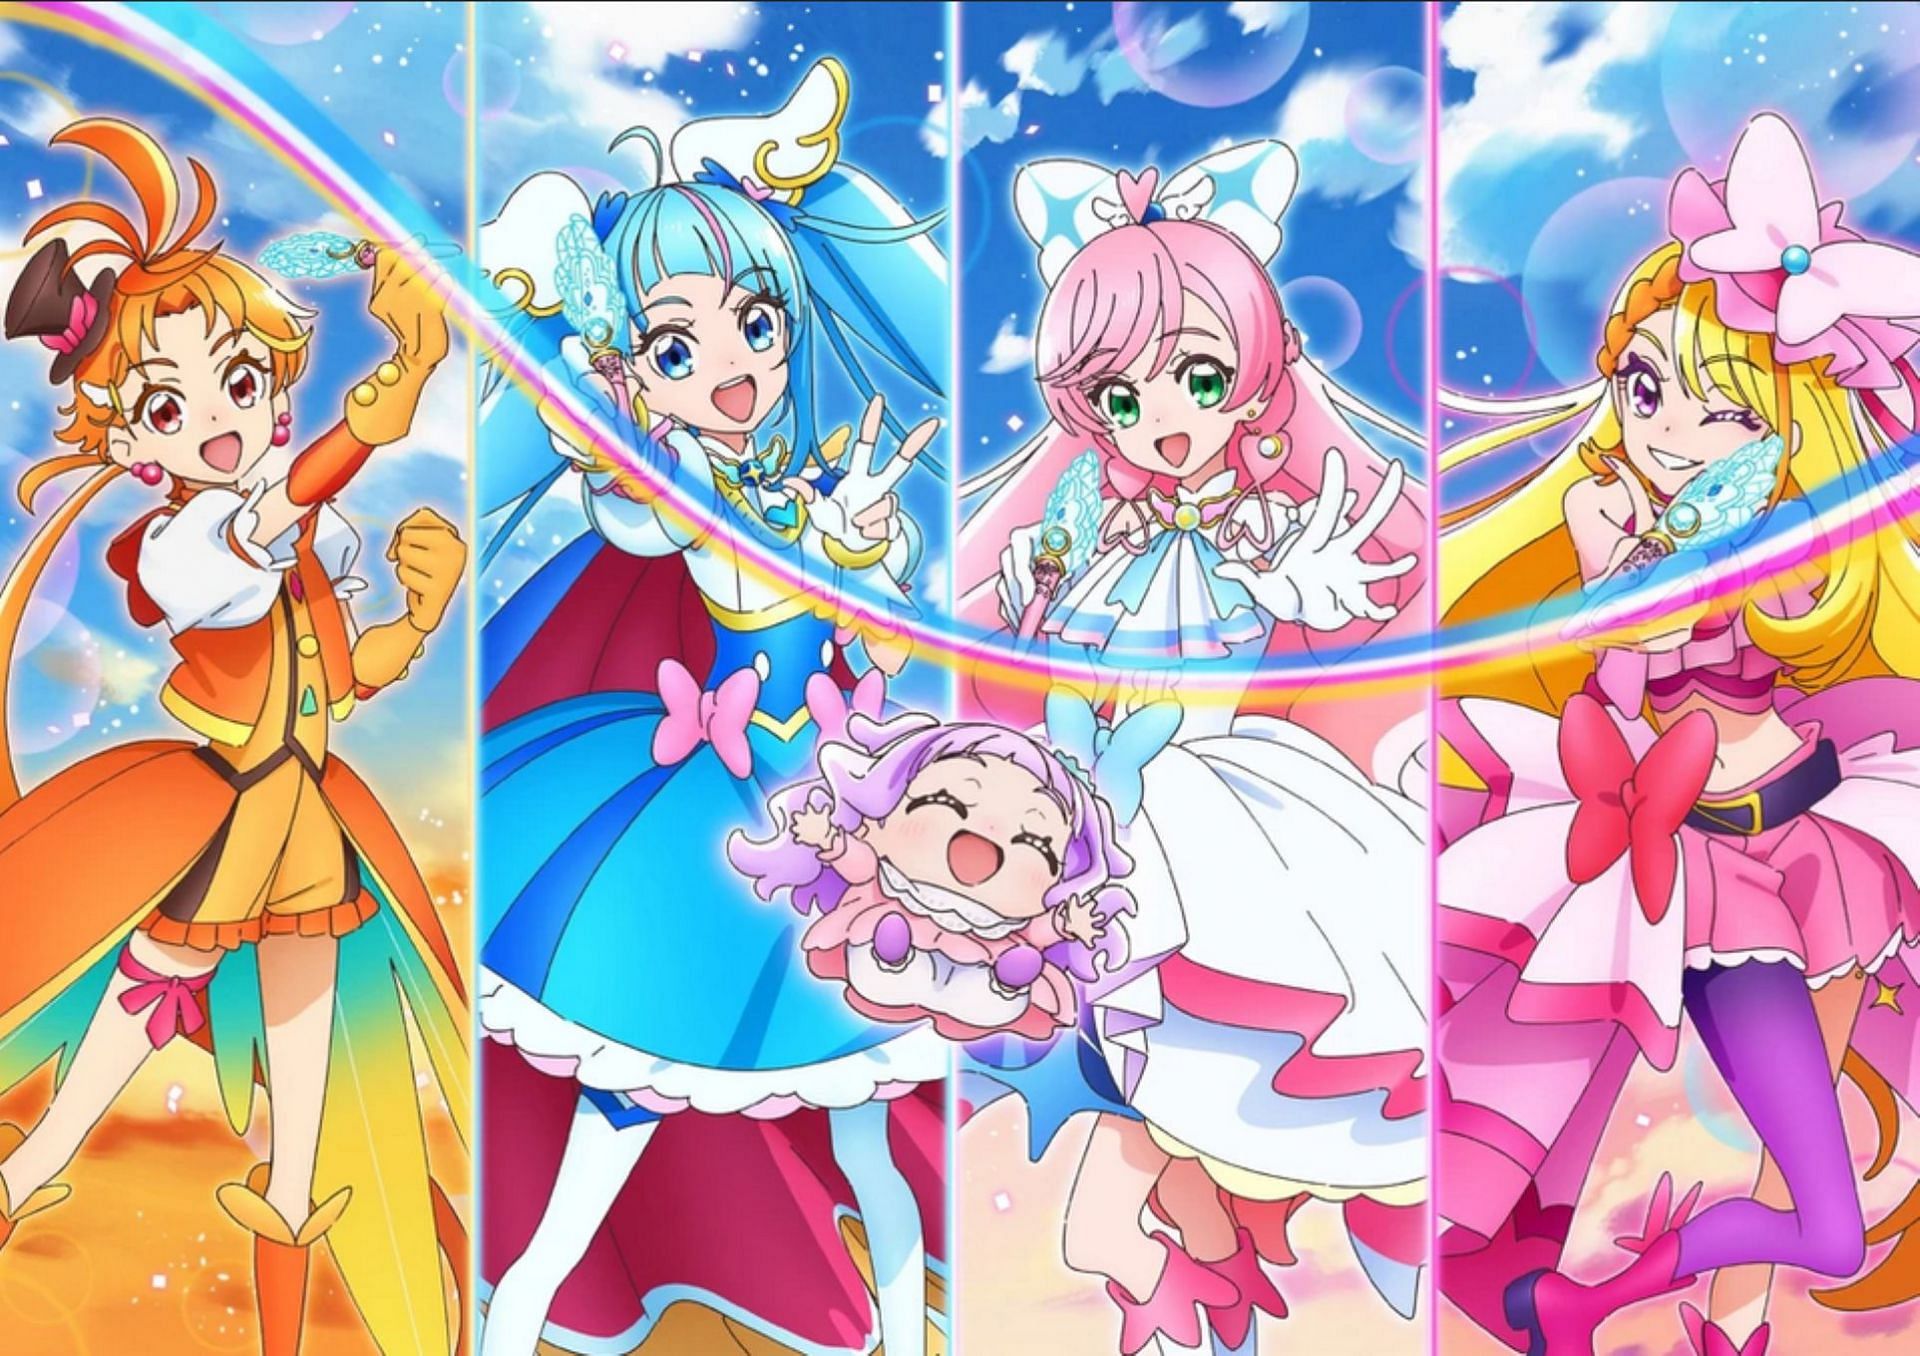 Promo art featuring the main cast (Image via Toei Animation)